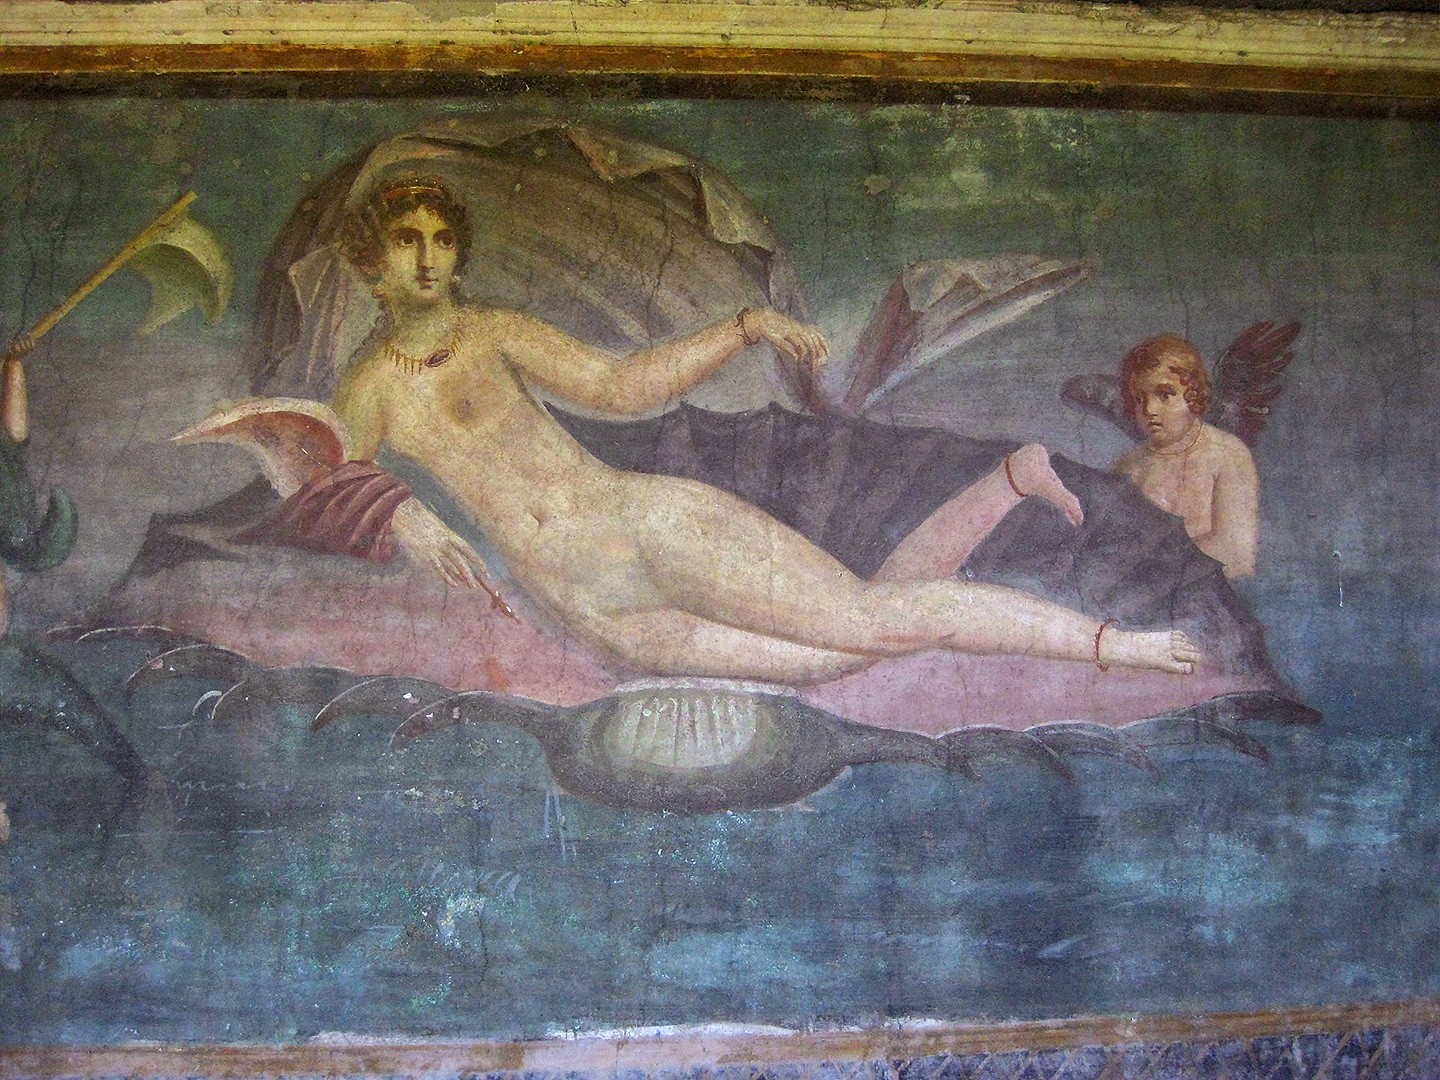 Huis van Venus, Pompeii, Campani, Itali; House of Venus, Pompeii, Campania, Italy